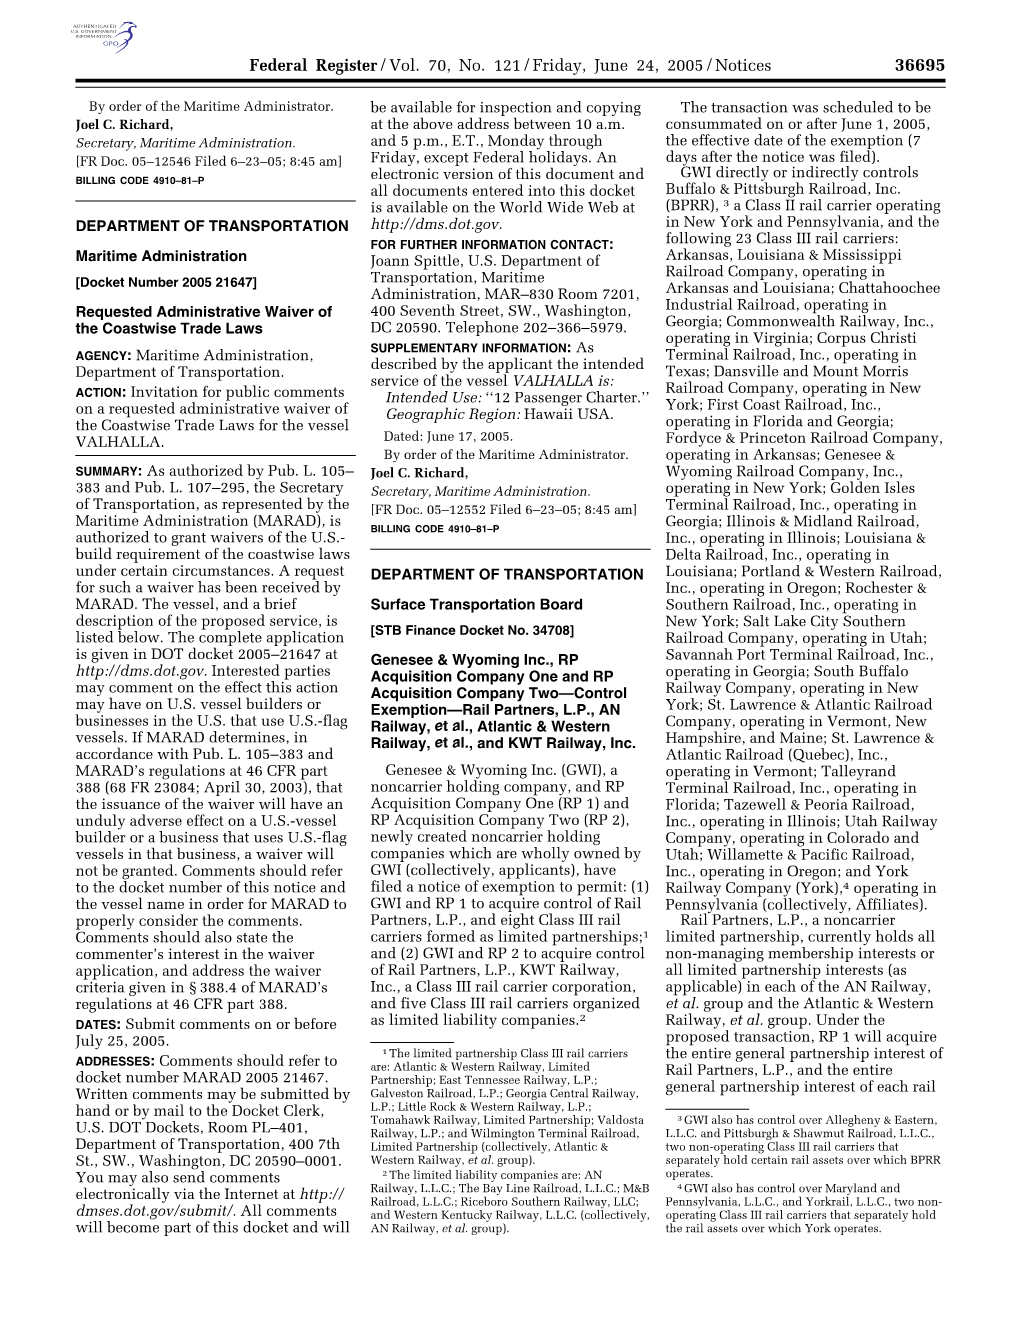 Federal Register/Vol. 70, No. 121/Friday, June 24, 2005/Notices